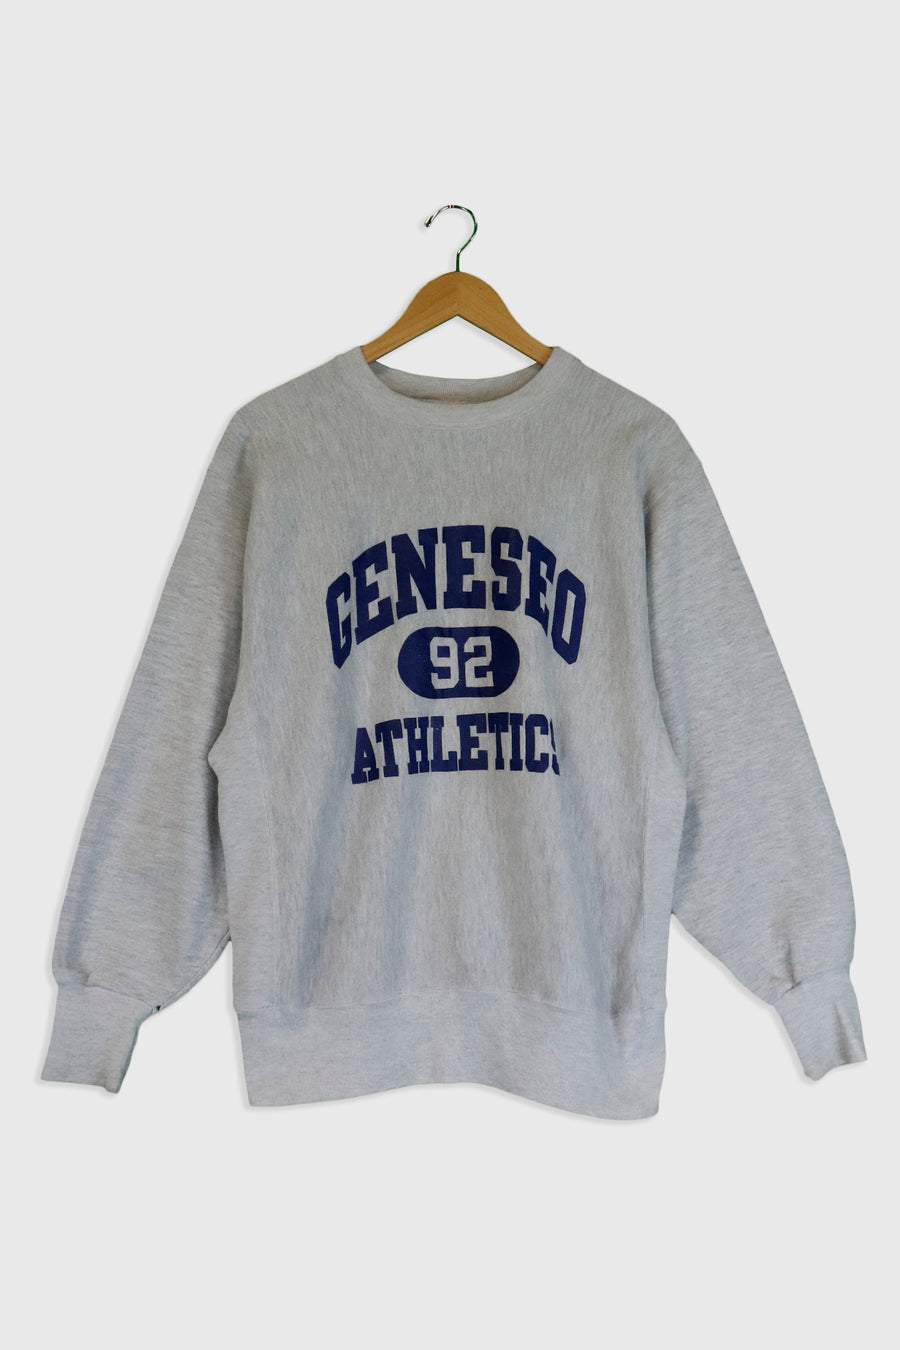 Vintage Genesso Athletics 92 Sweatshirt Sz L